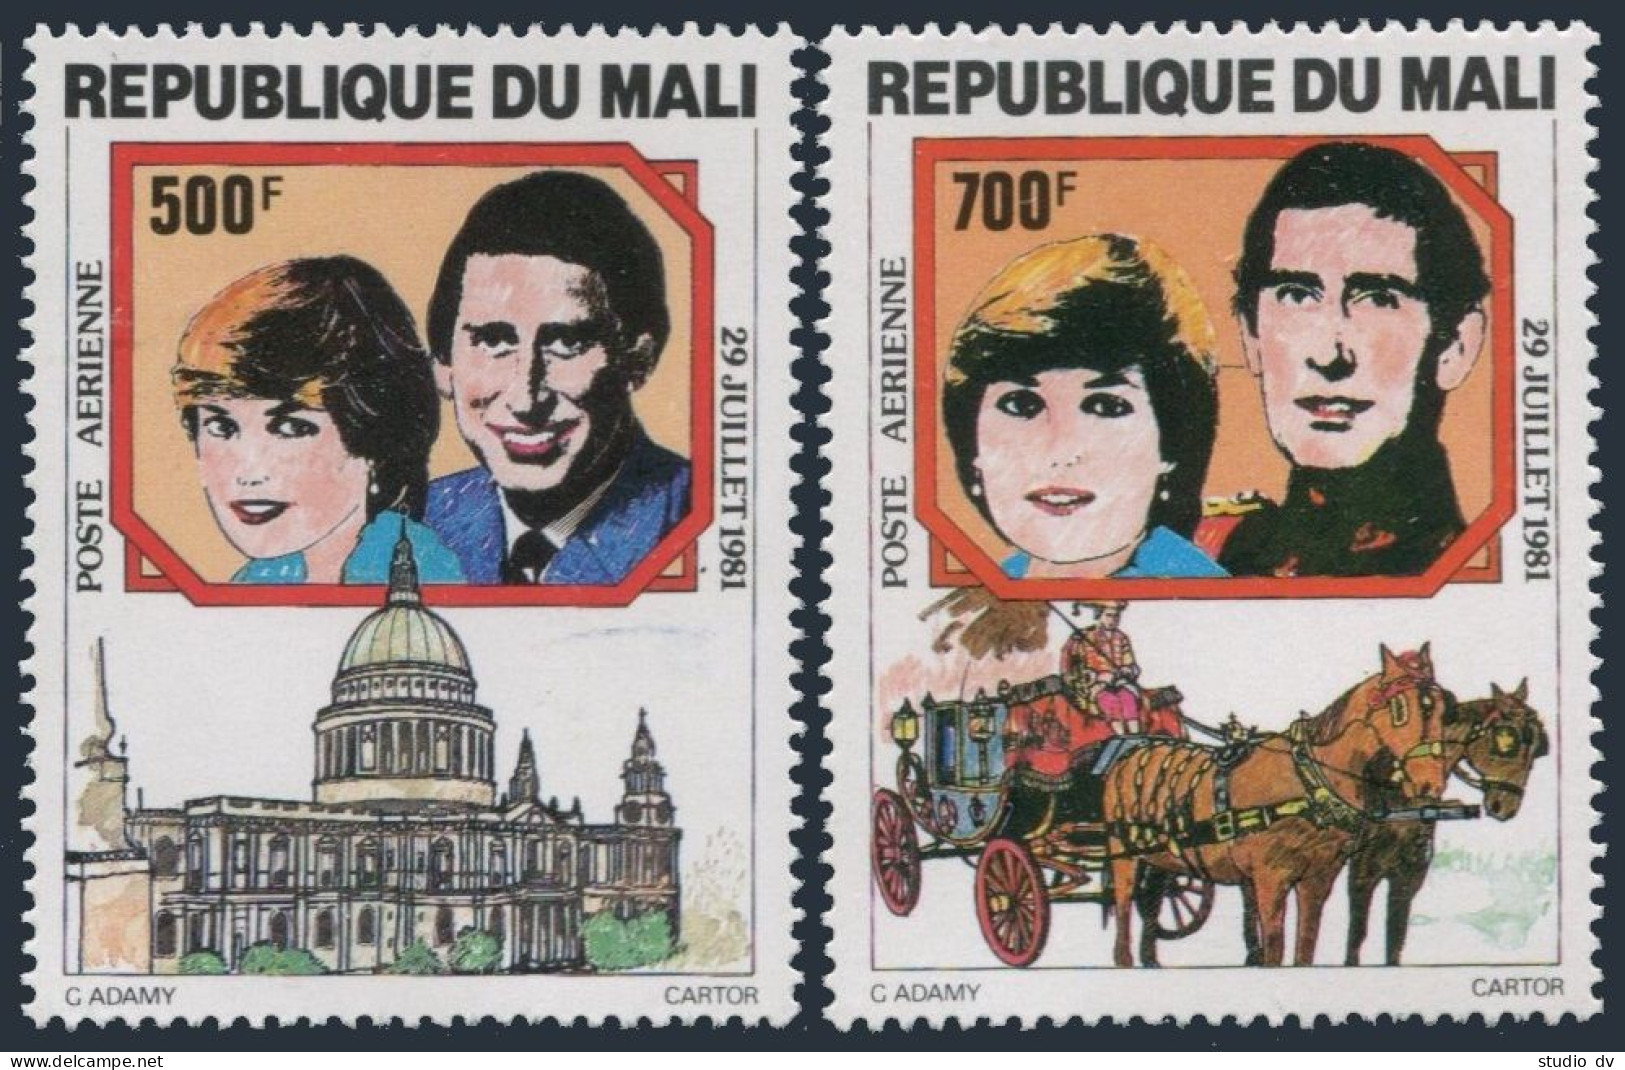 Mali C436-C437, MNH. Mi 878-879. Royal Wedding,1981. Lady Diana, Prince Charles. - Mali (1959-...)